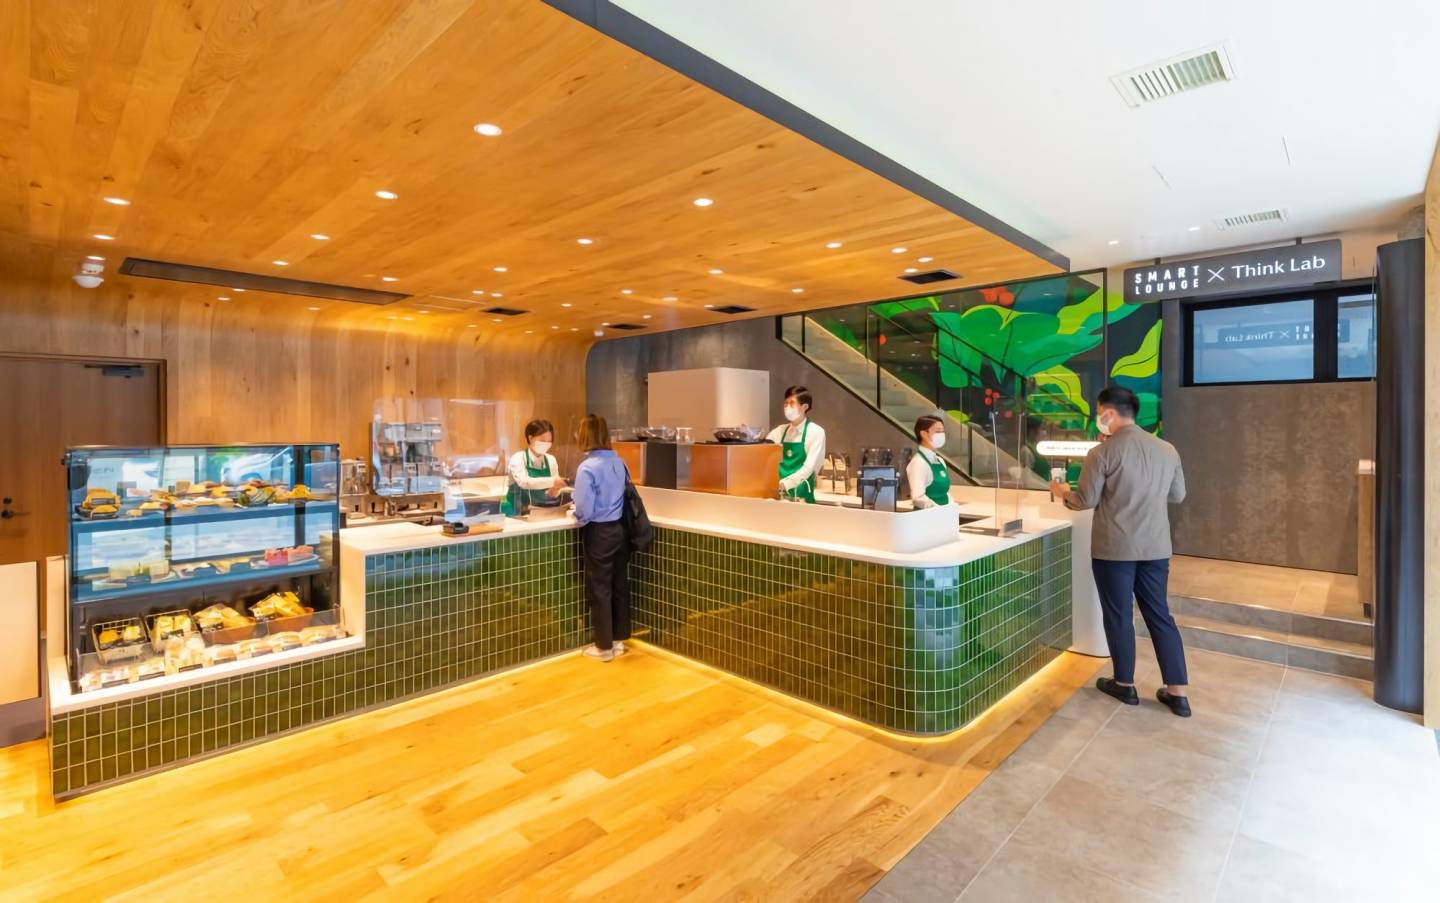 Starbucks Japan transforms cafe into a public coworking space SlashGear